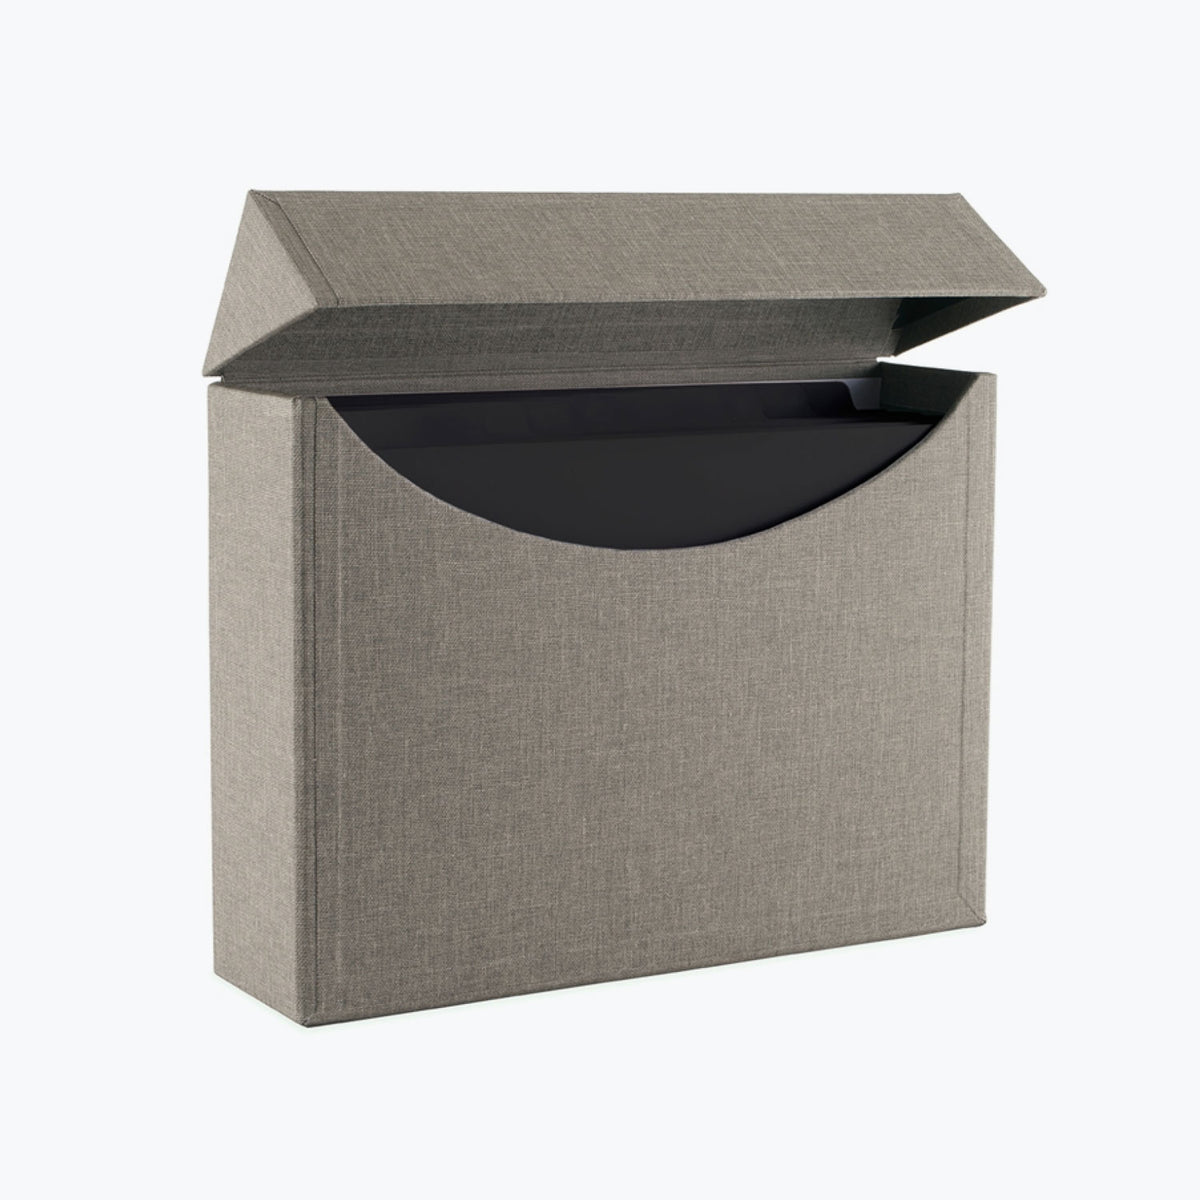 Bookbinders Design - Filing Box - A4 - Light Grey